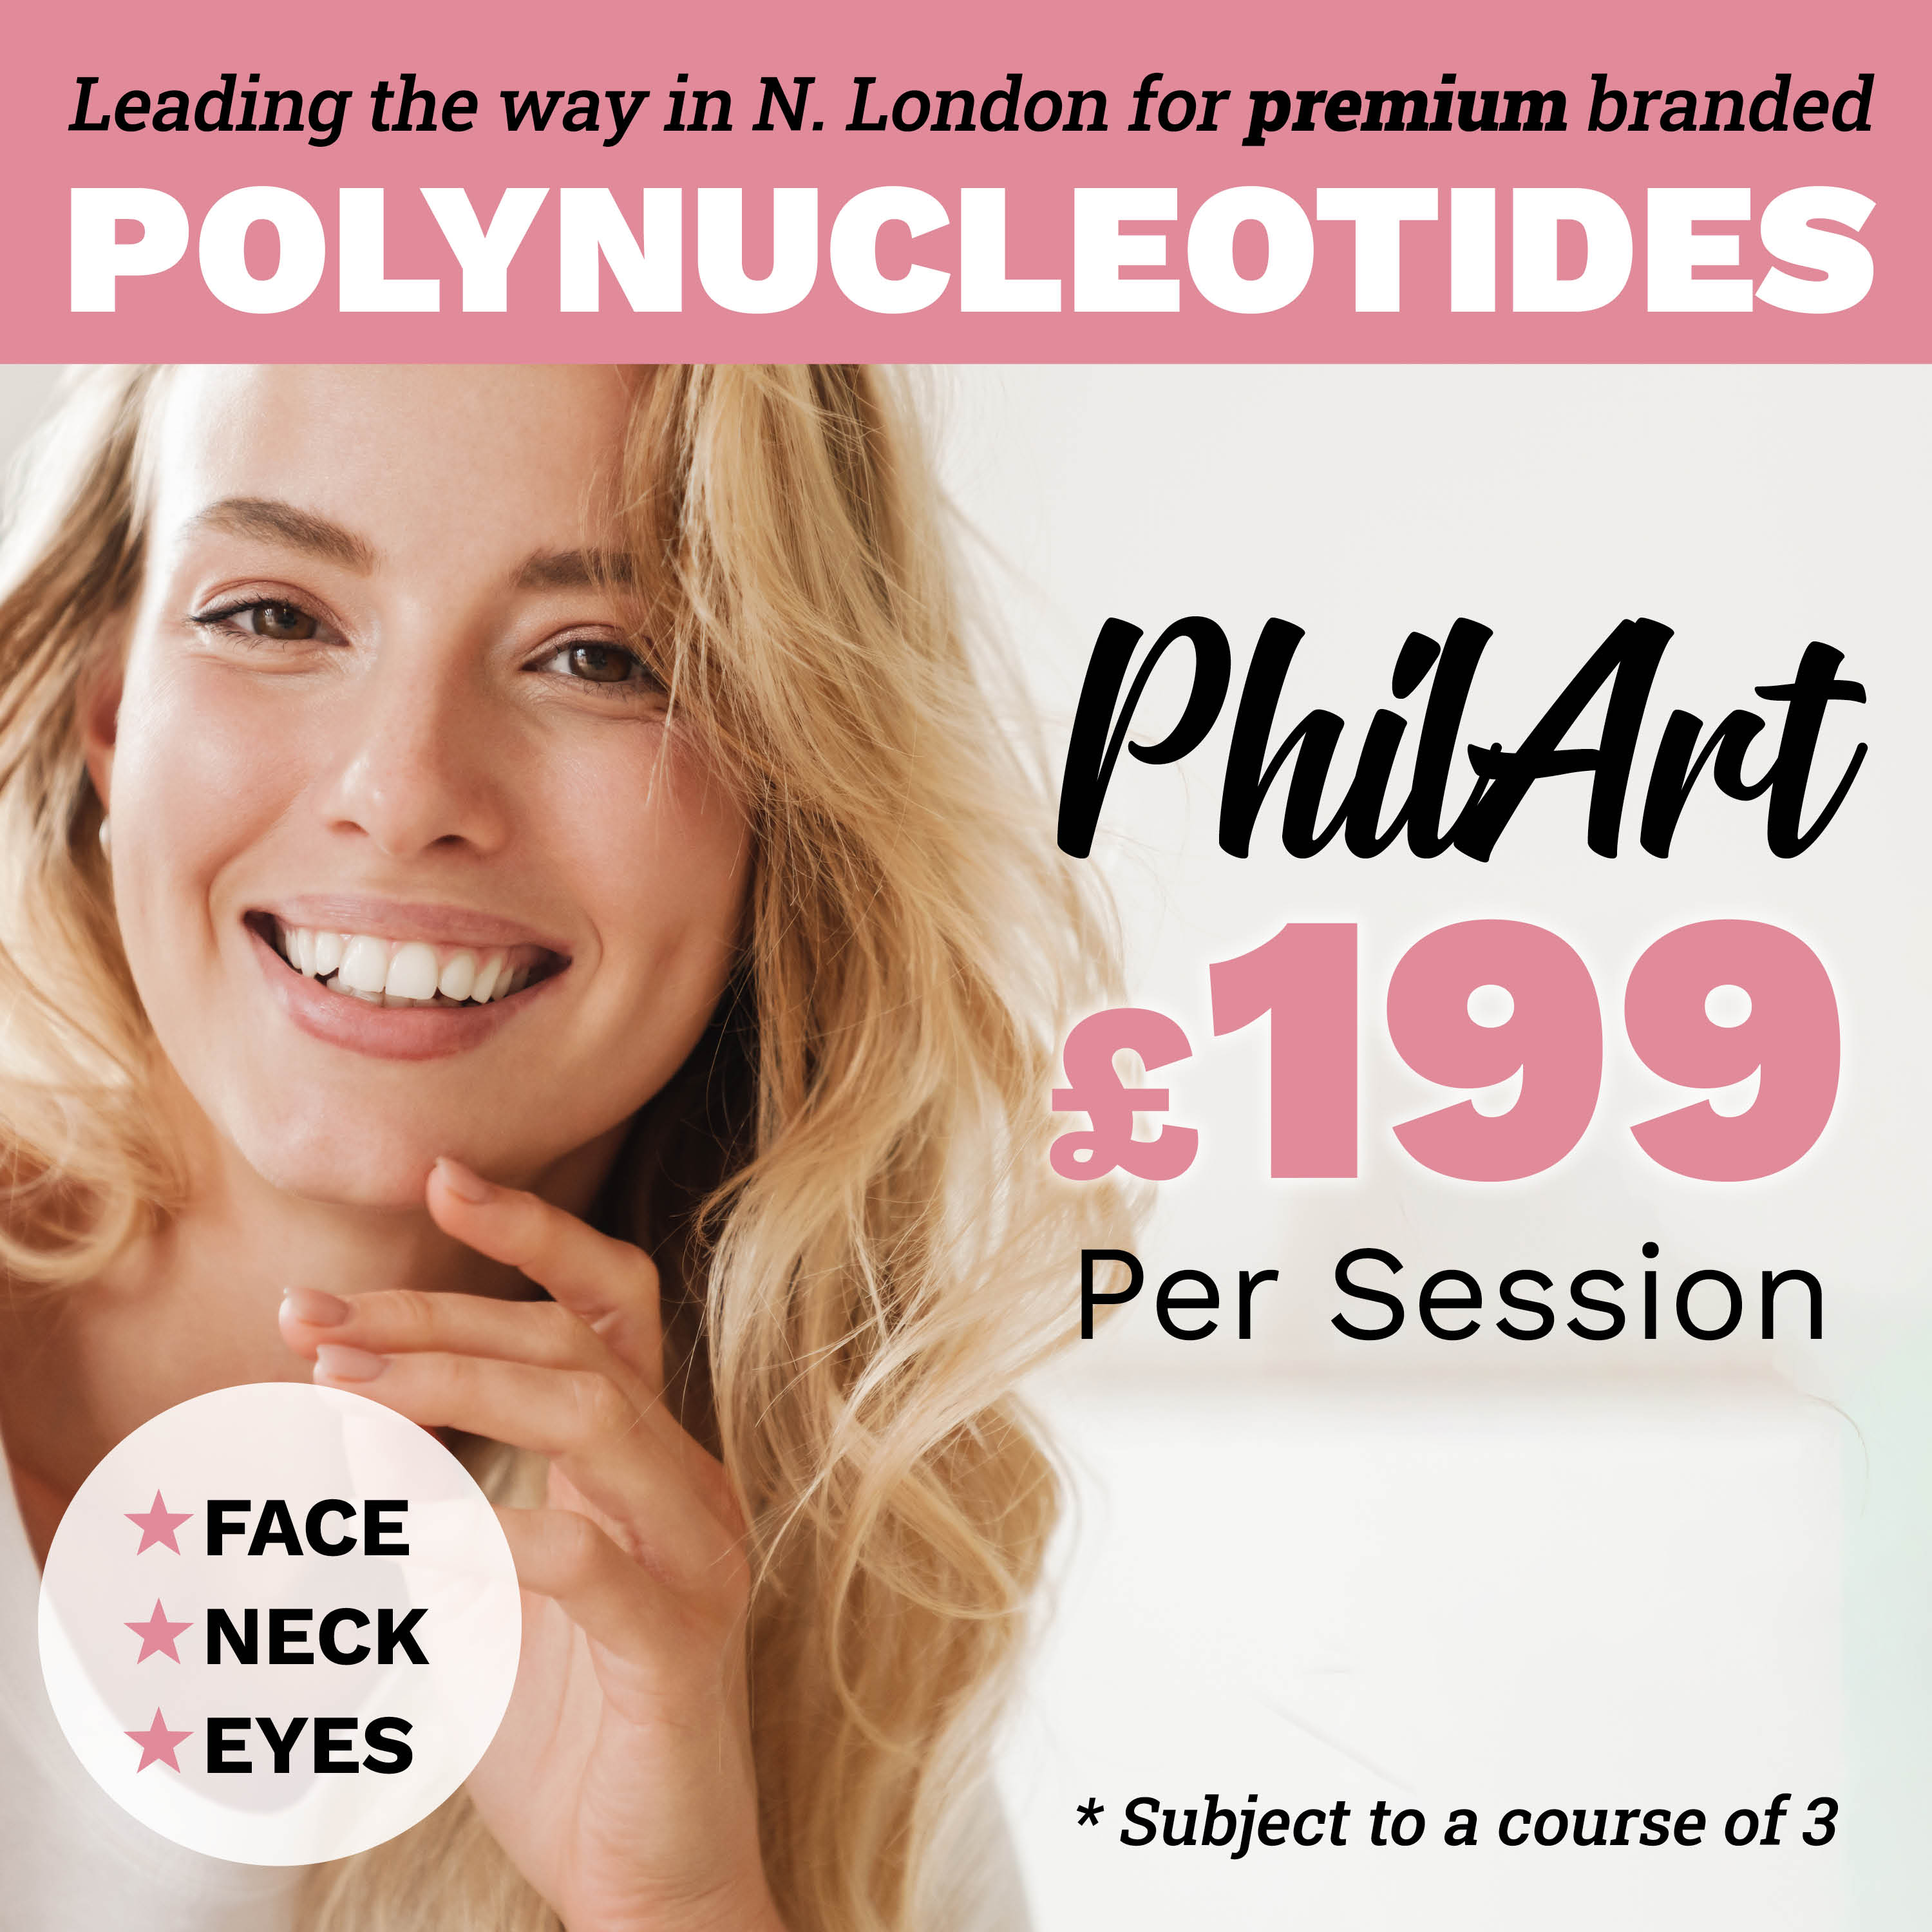 Polynucleotides Philart £199